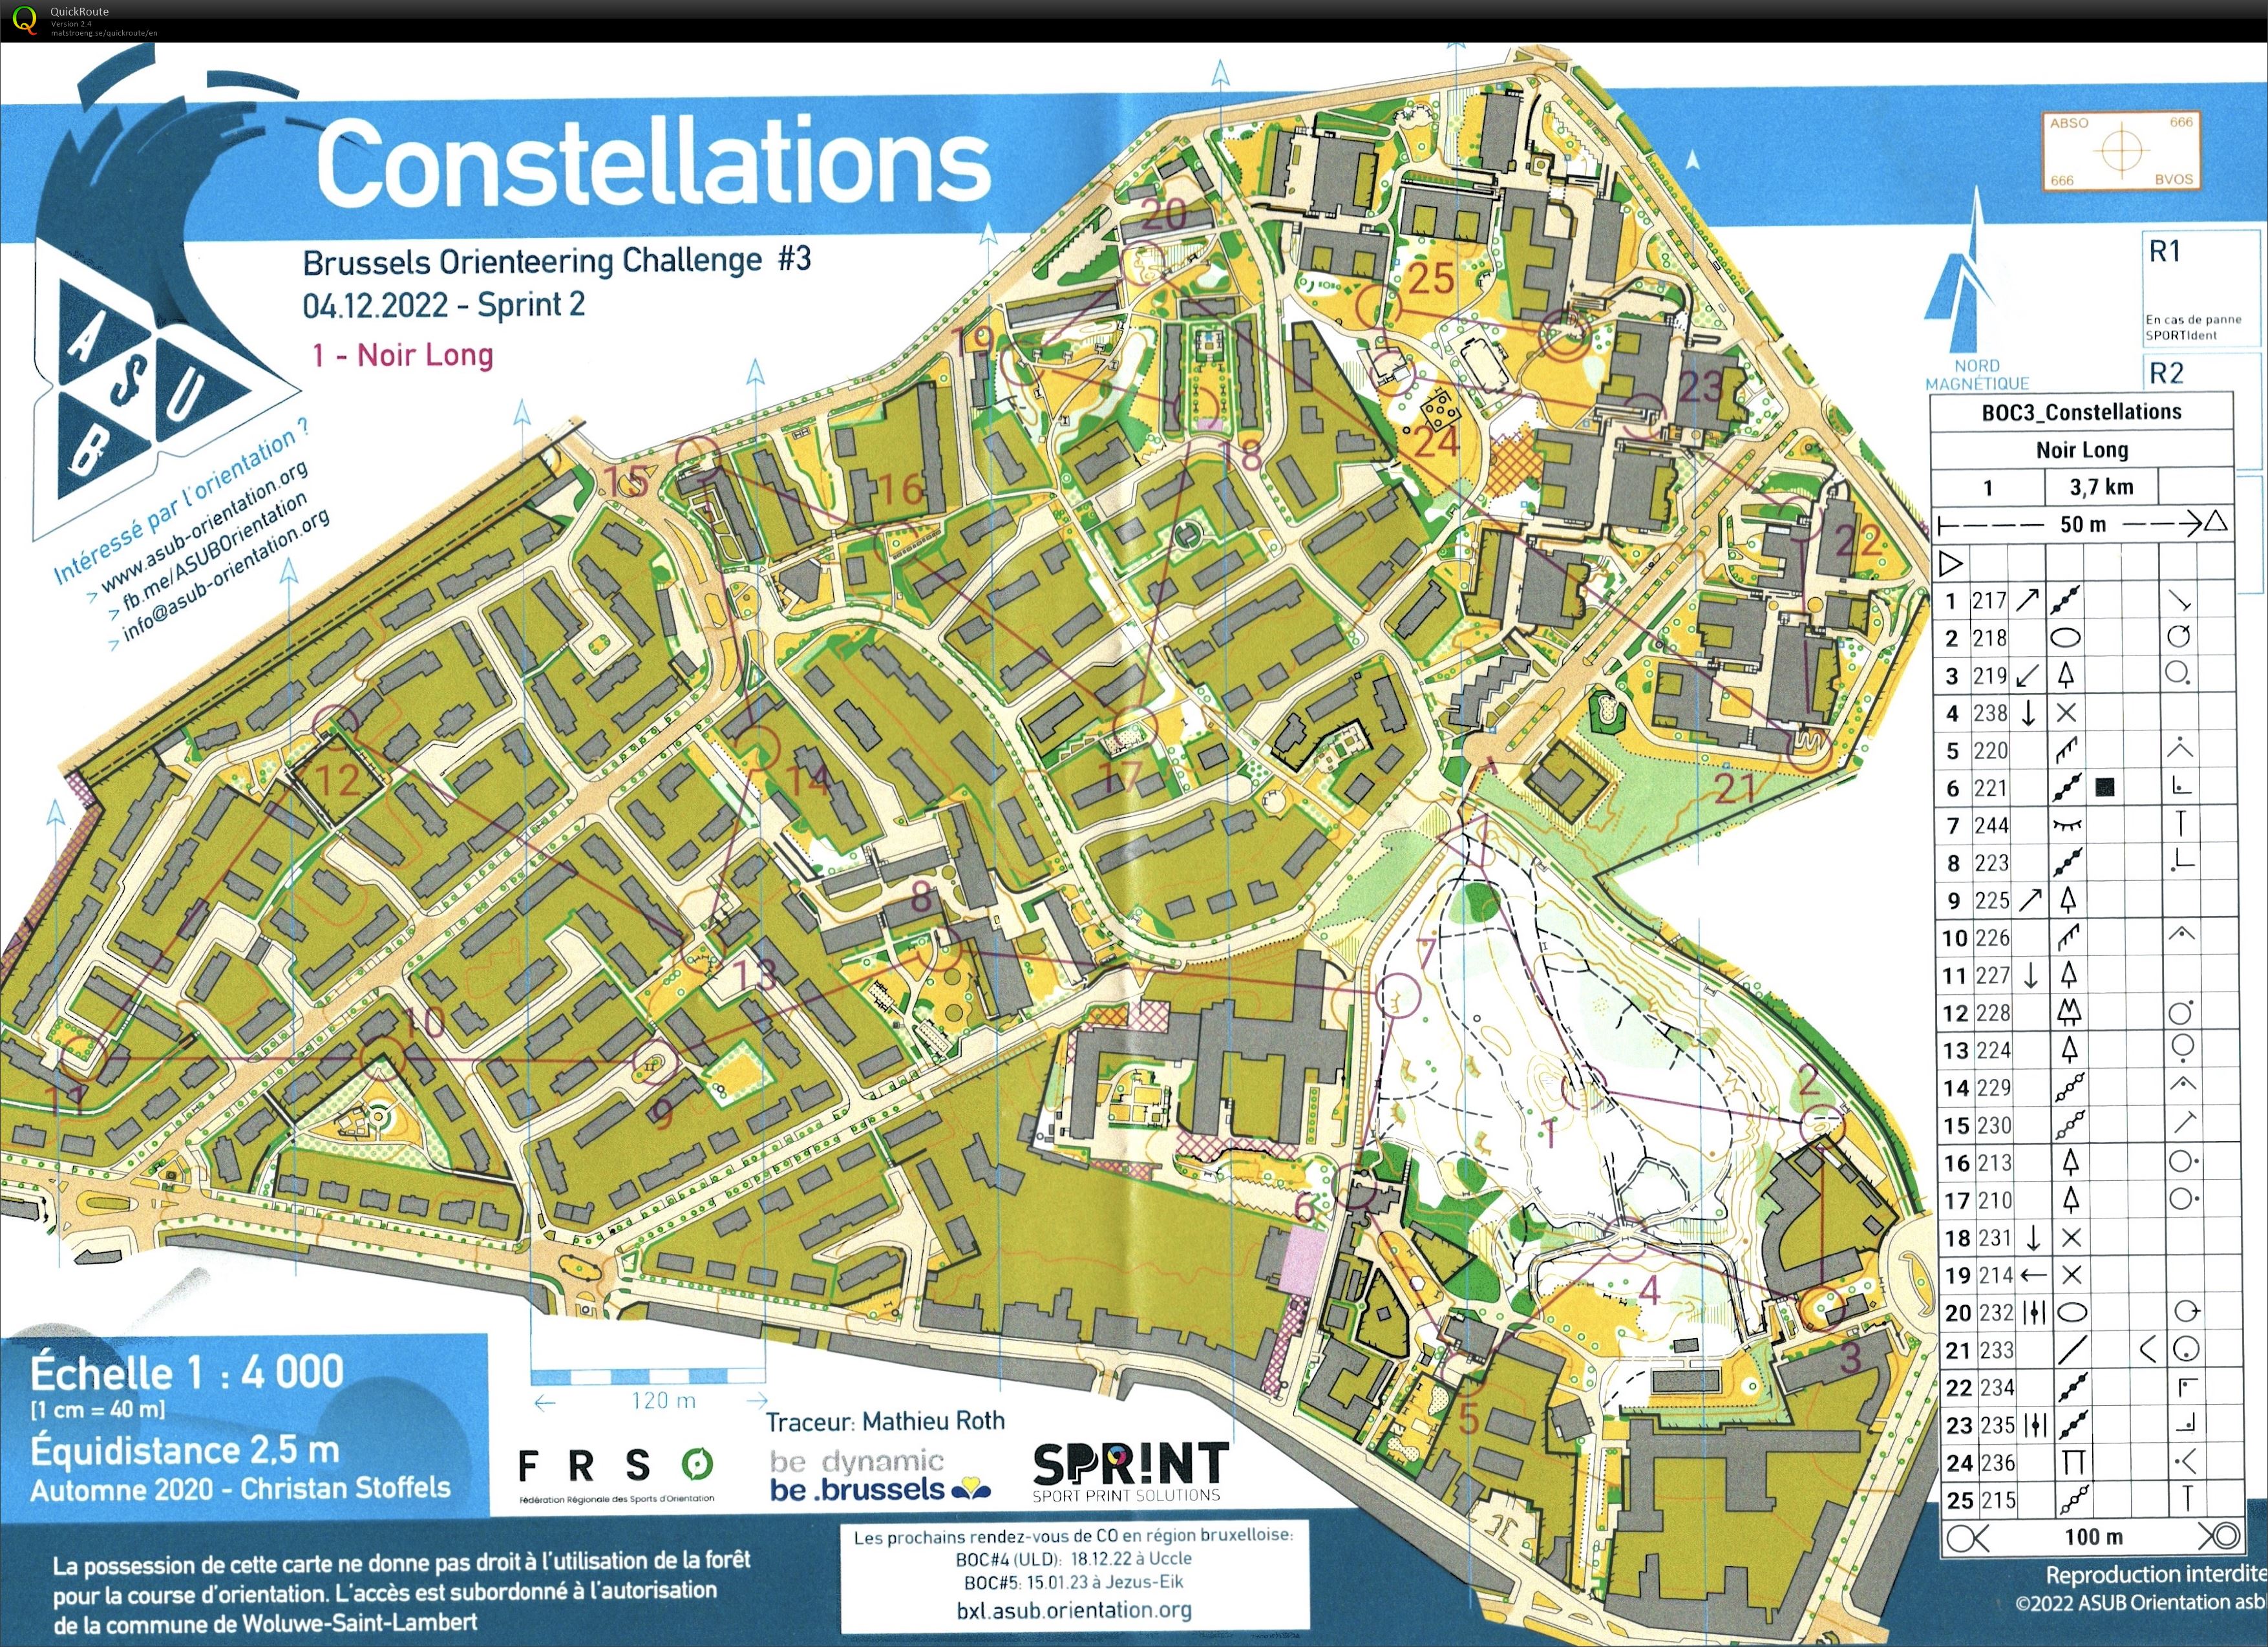 Brussels Orienteering Challenge #3 - Sprint 2 - Constellations (2022-12-04)